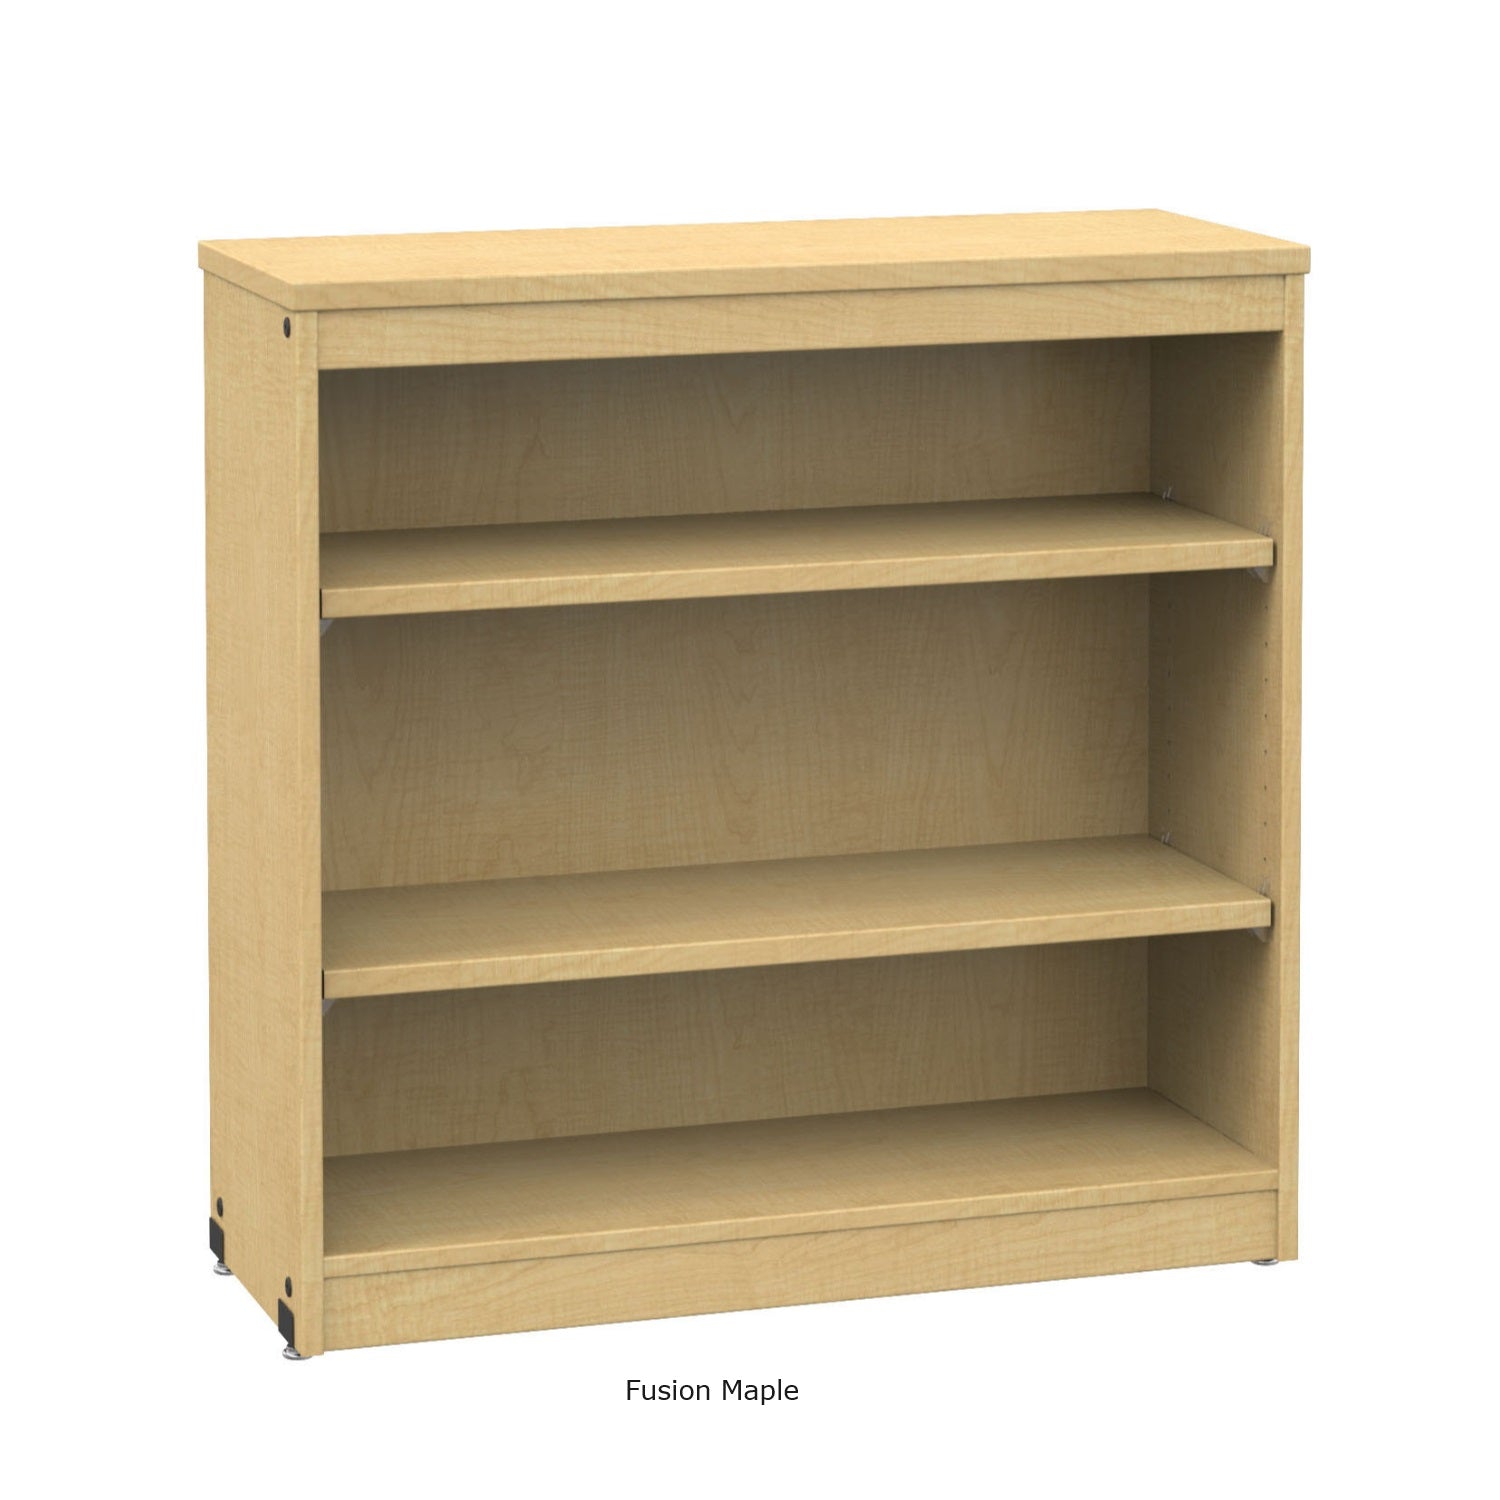 4-Shelf Bookcase with 2 Adjustable Shelves, 36" High